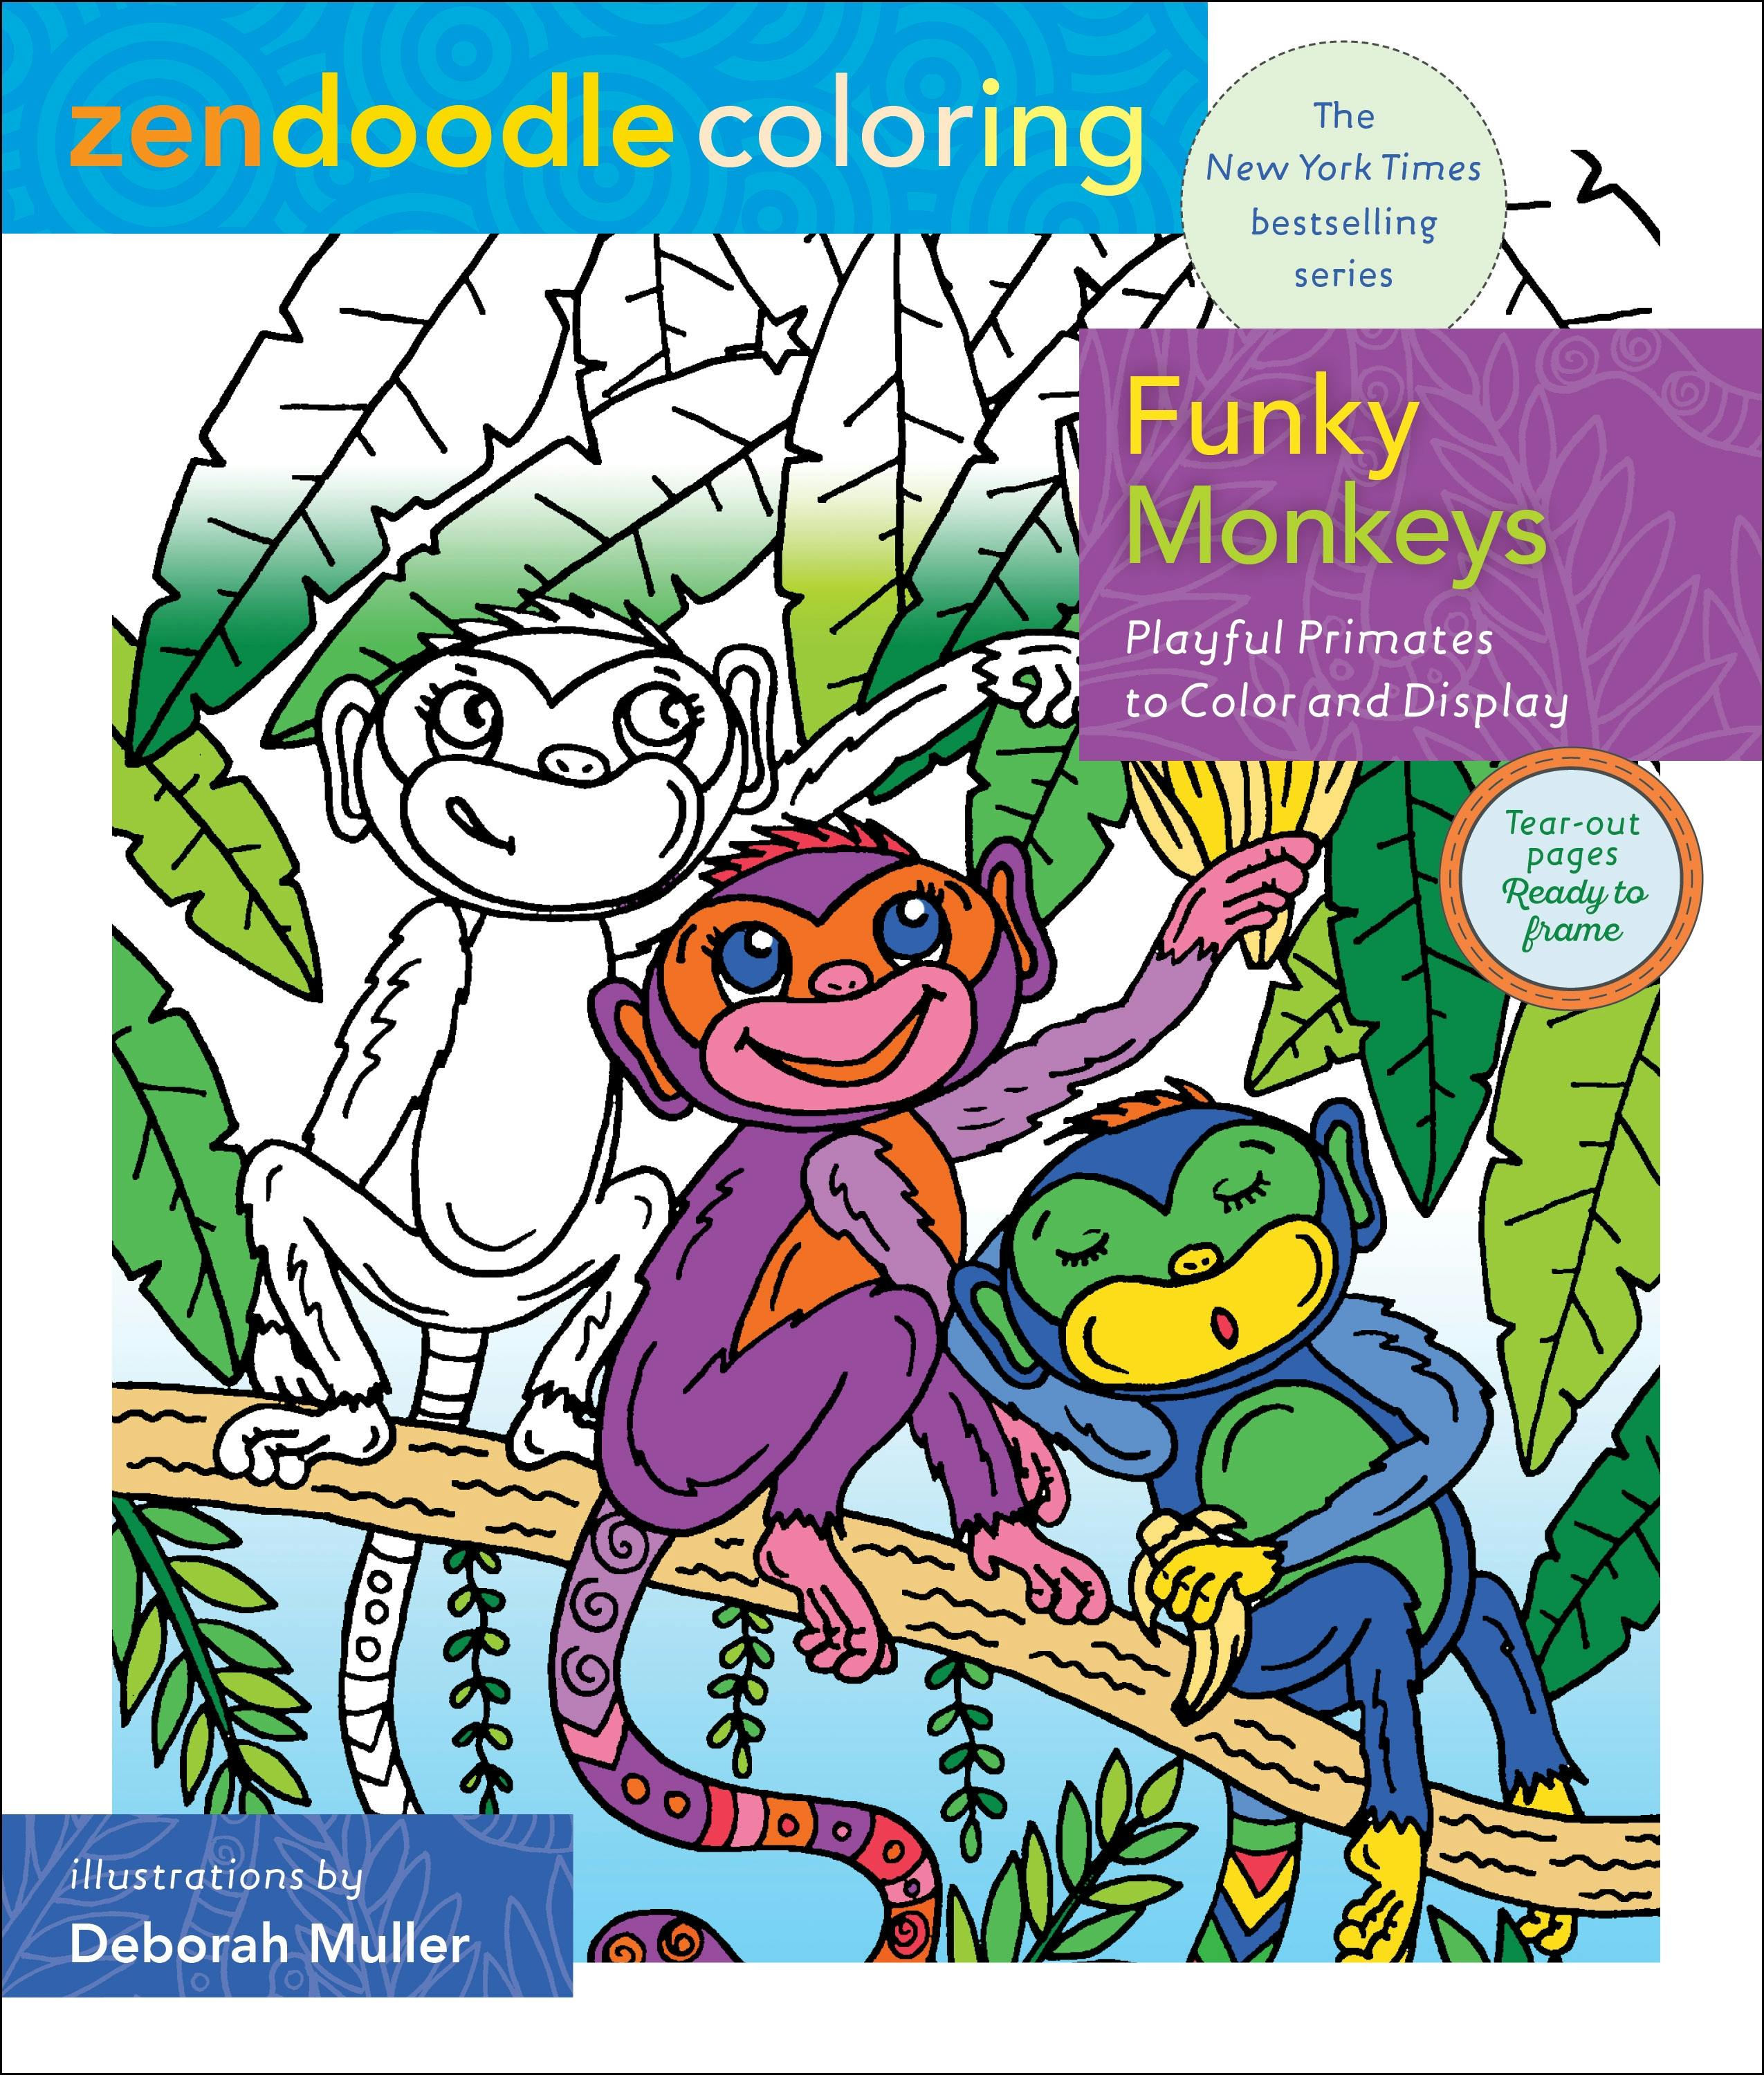 Zendoodle Coloring: Funky Monkeys